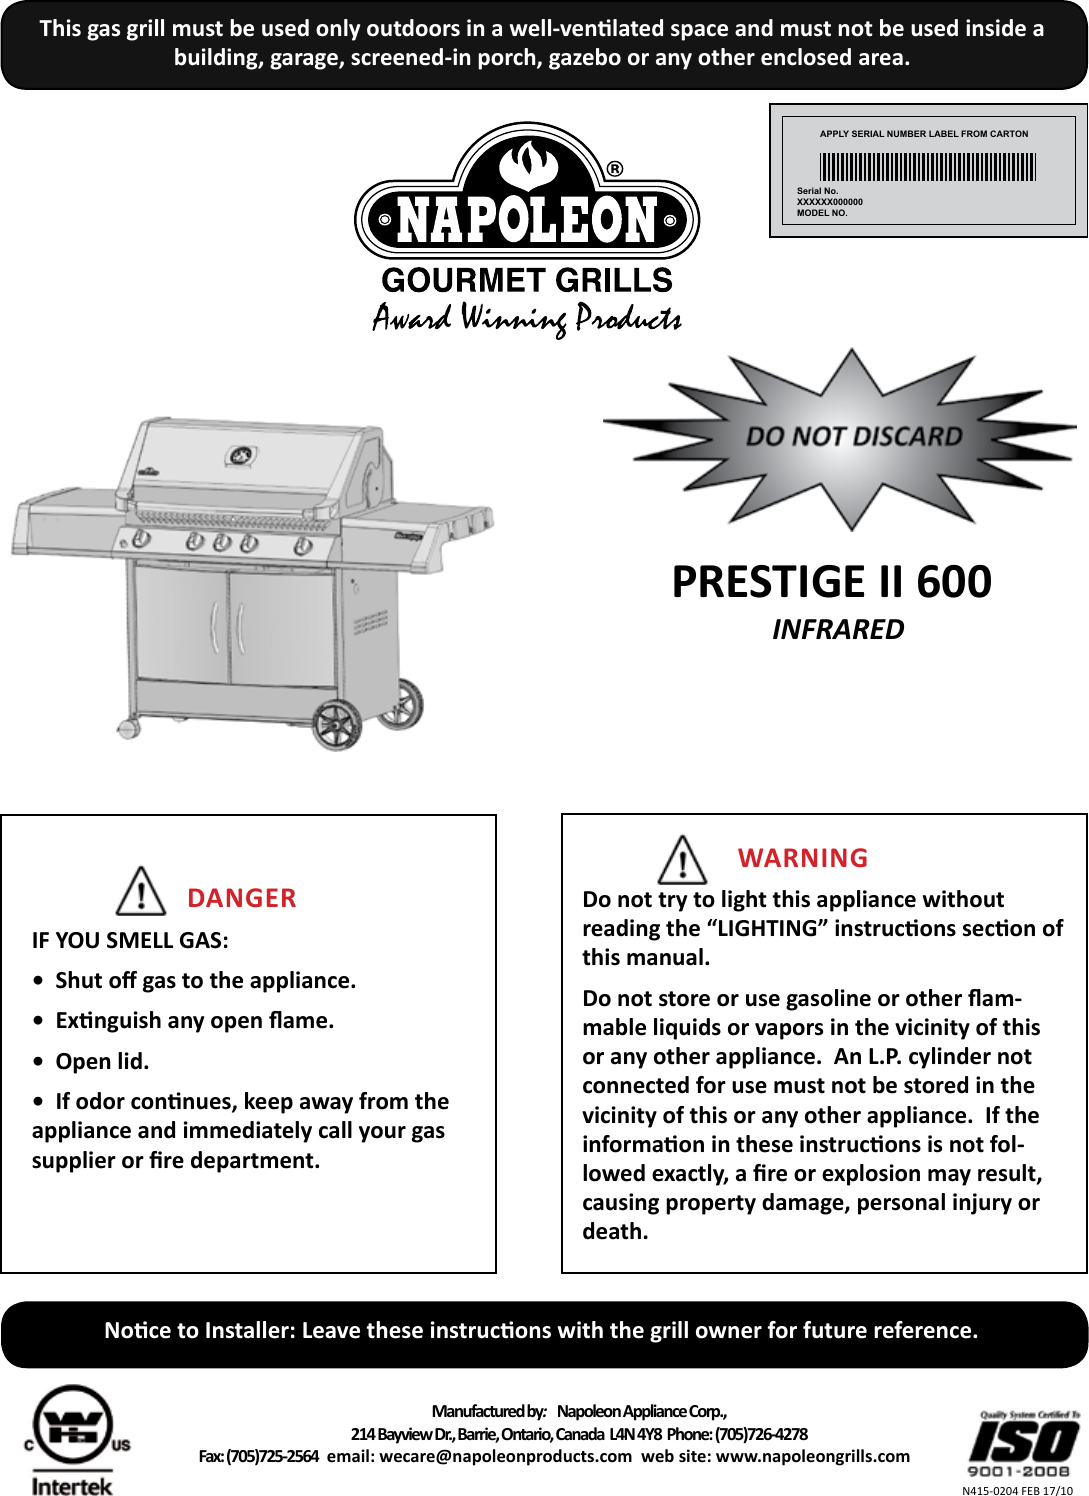 napoleon-grills-prestige-ii-600-users-manual